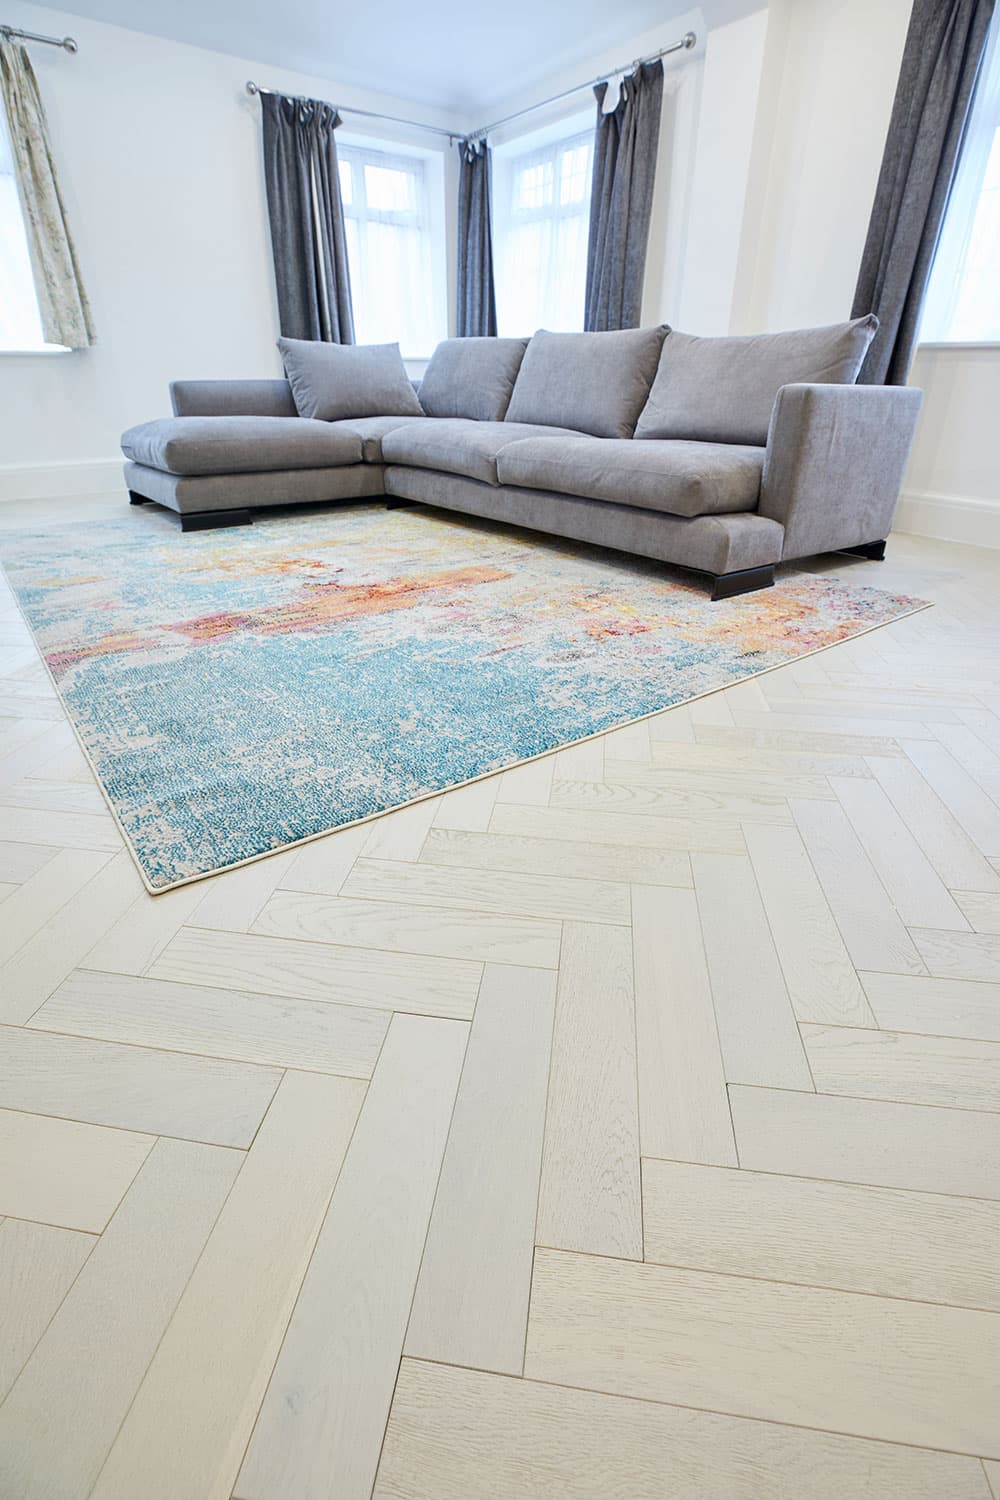 white oak flooring in living room with rug